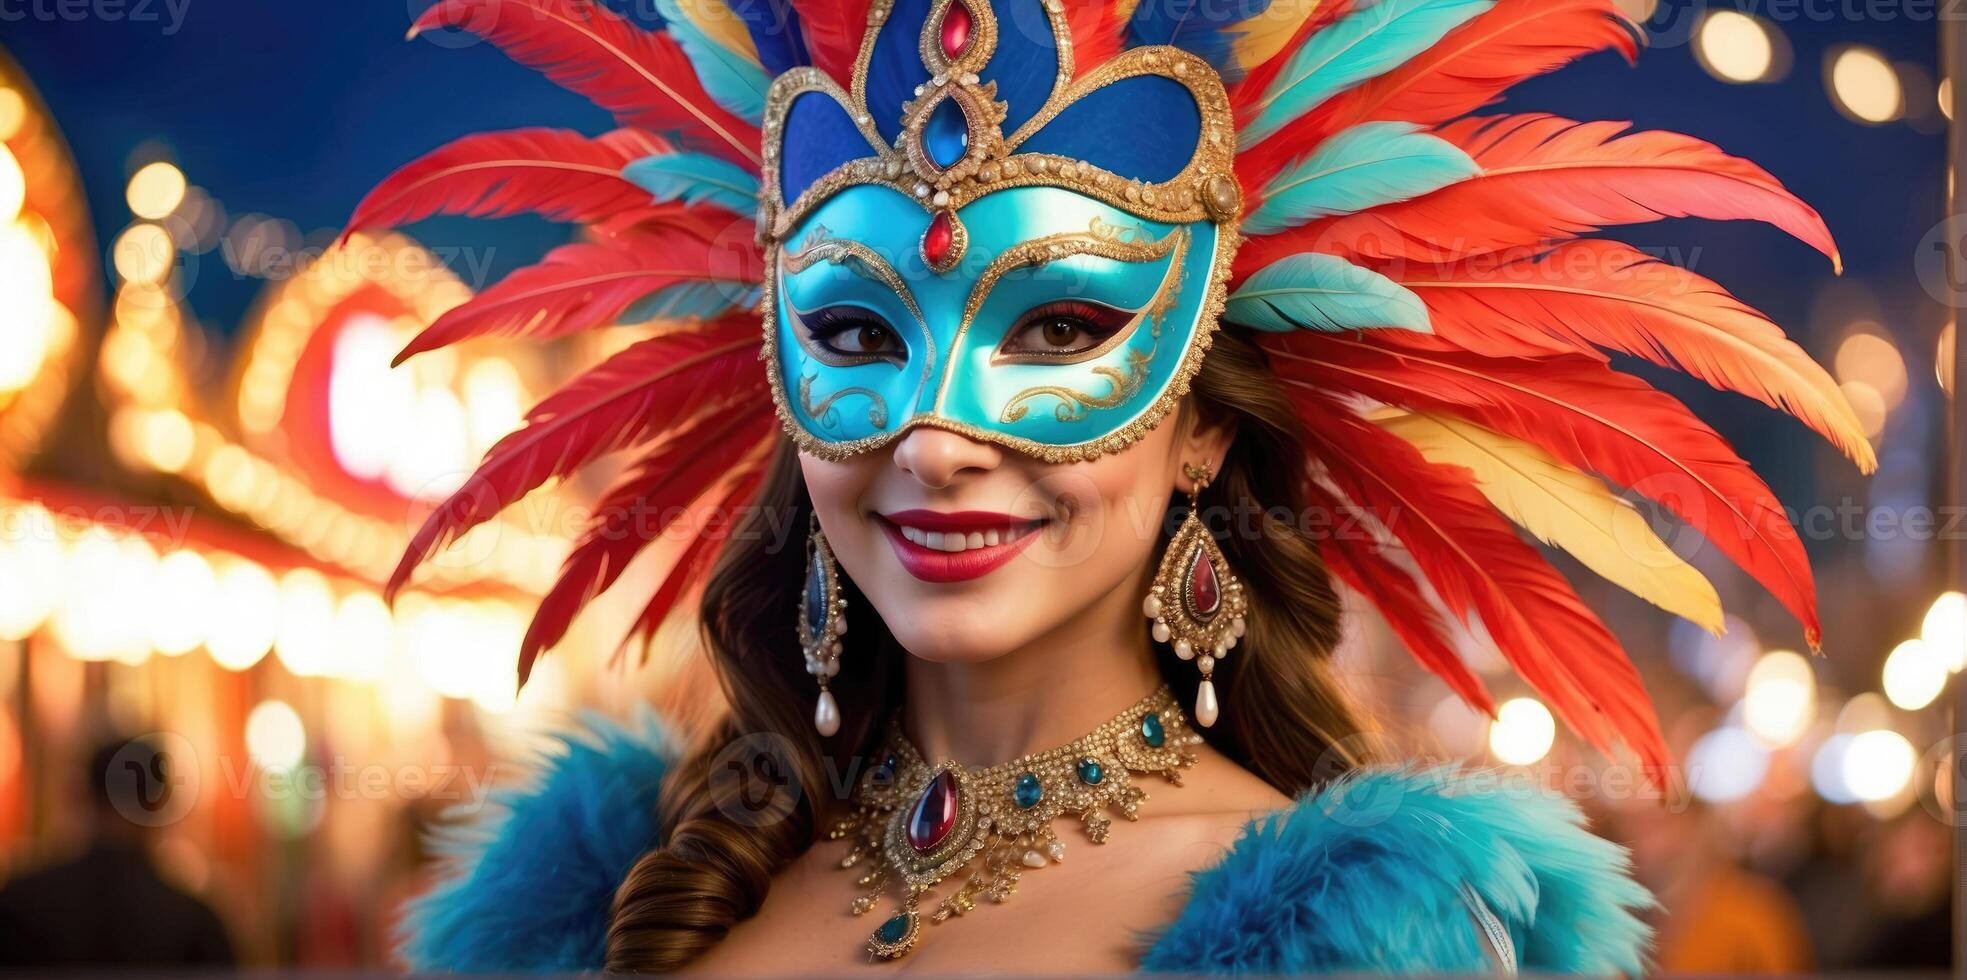 ai gegenereerd mooi vrouw vervelend Venetiaanse carnaval masker en kostuum foto